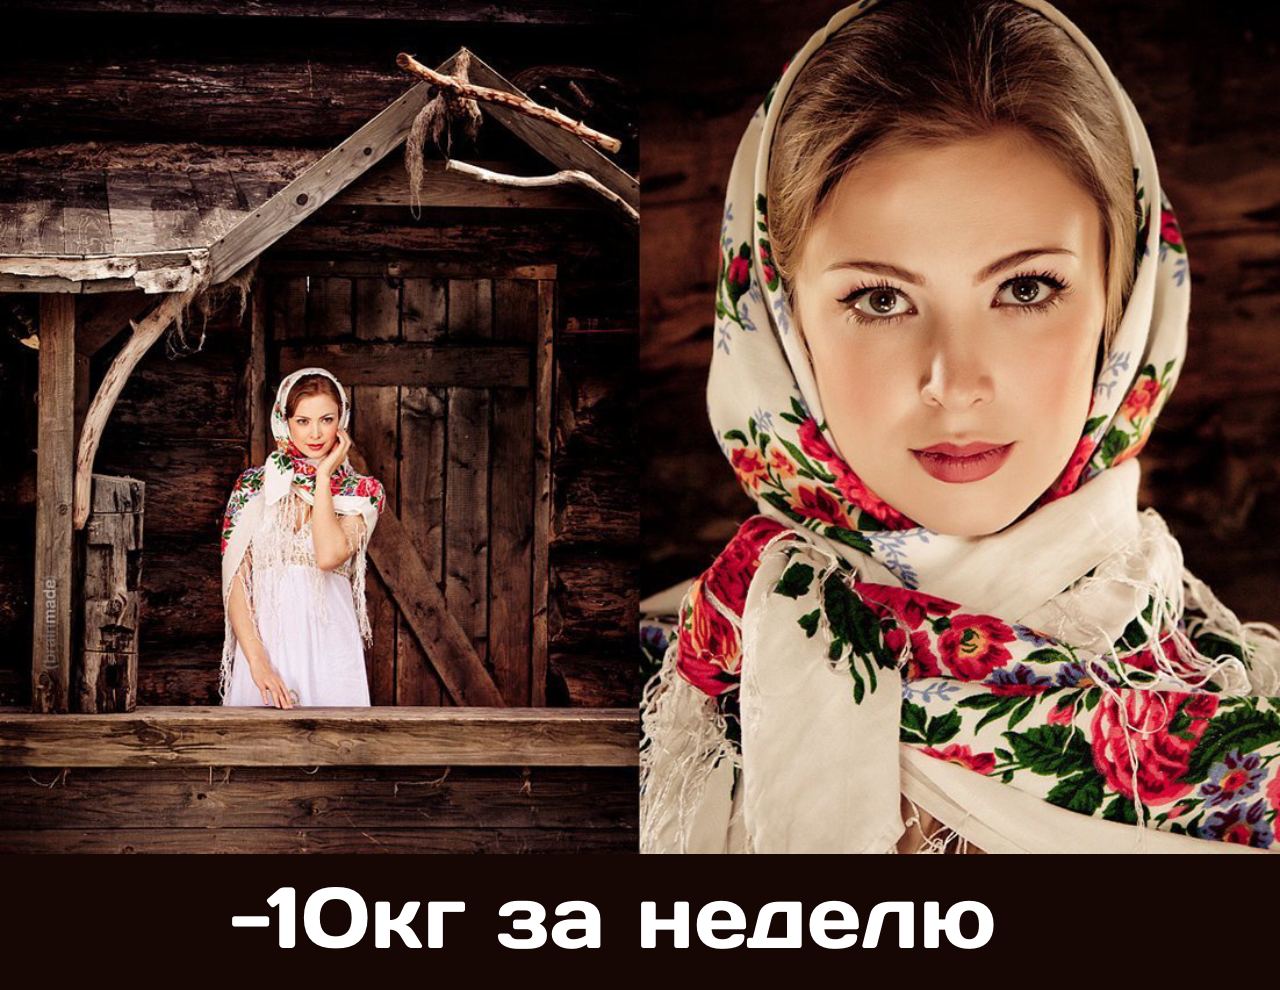 Измена русской красавицы